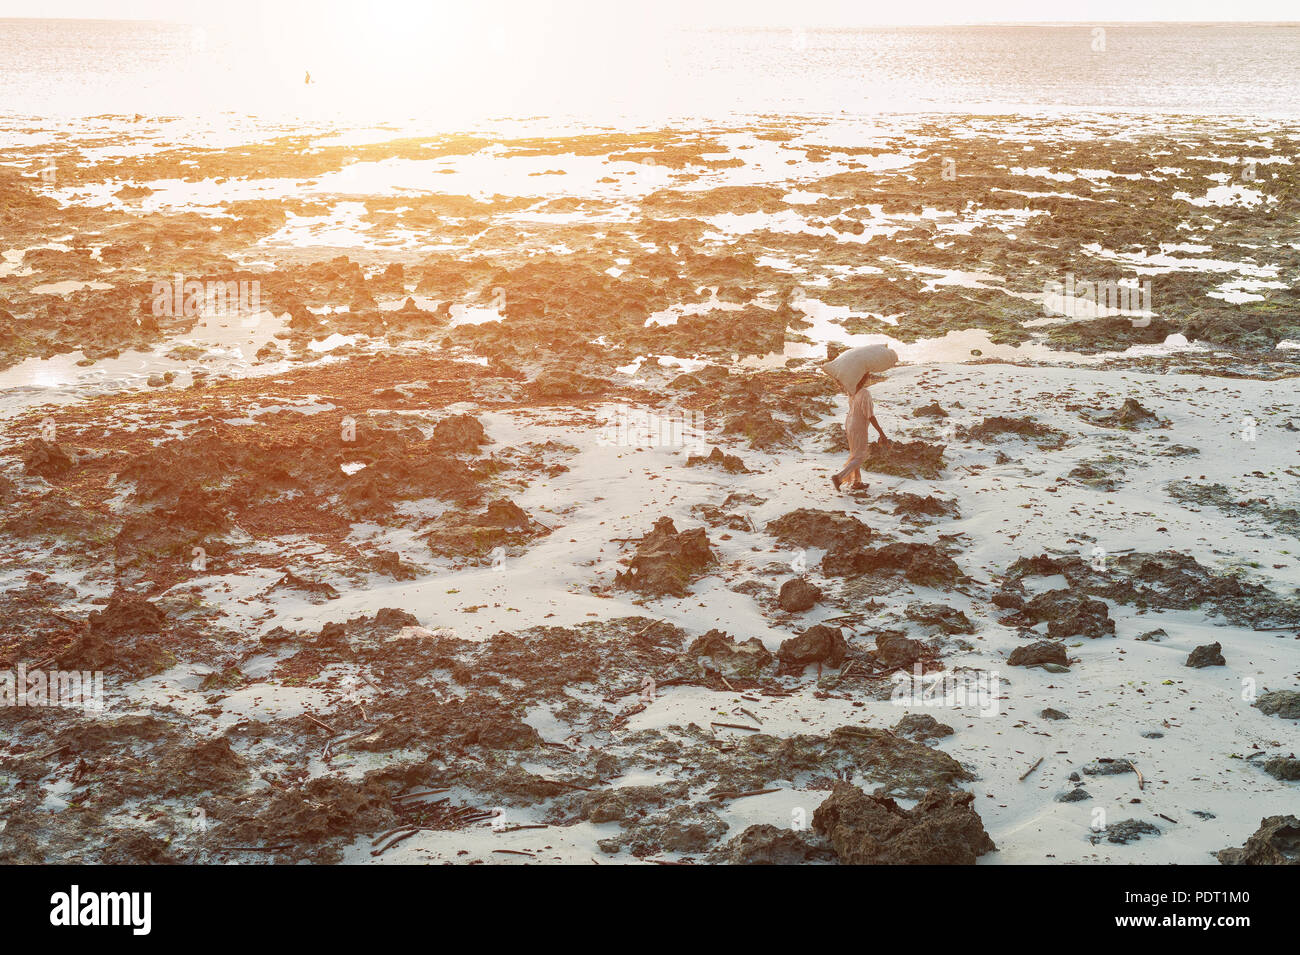 Locals harvest the seaweed at low tide. Golden dawn on Zanzibar island, Tanzania. Stock Photo